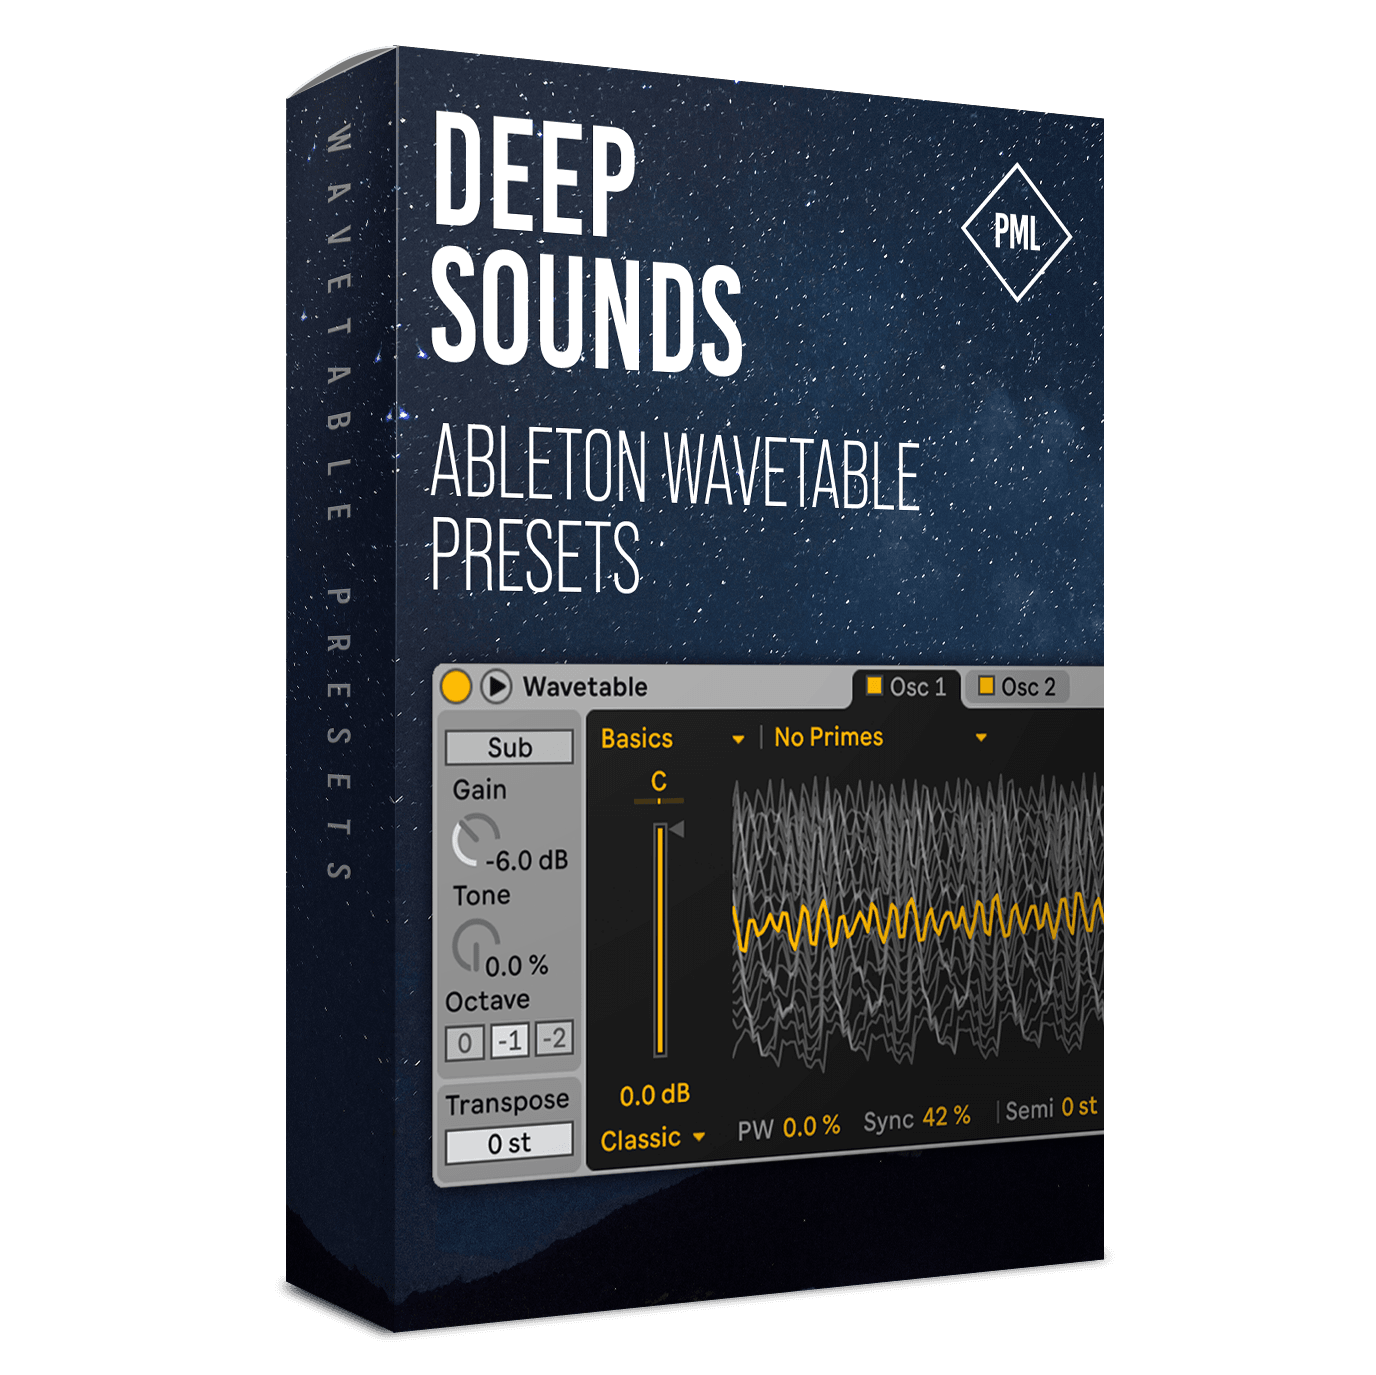 Deep Sounds - Ableton Wavetable Preset Pack